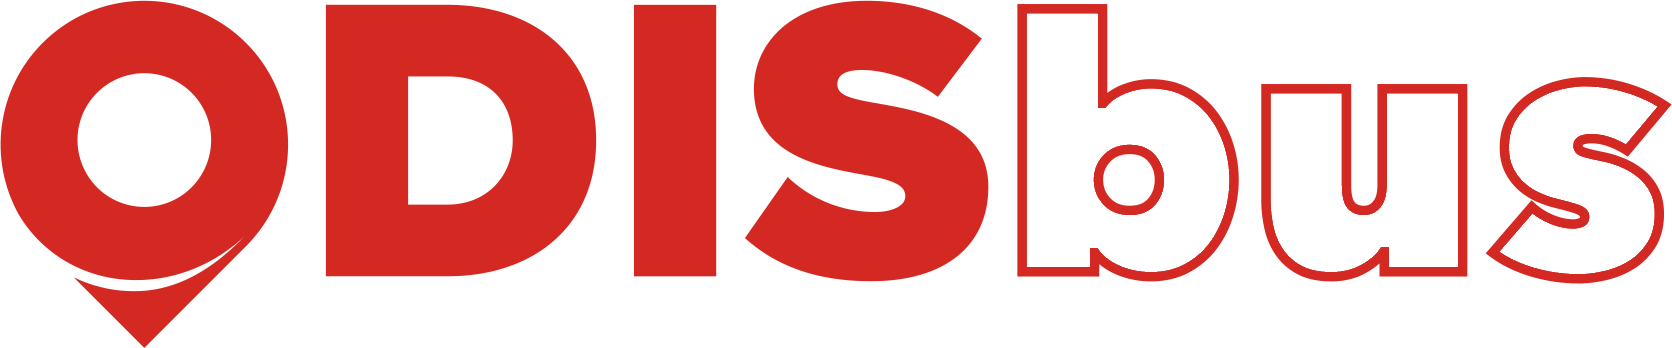 KODIS logo